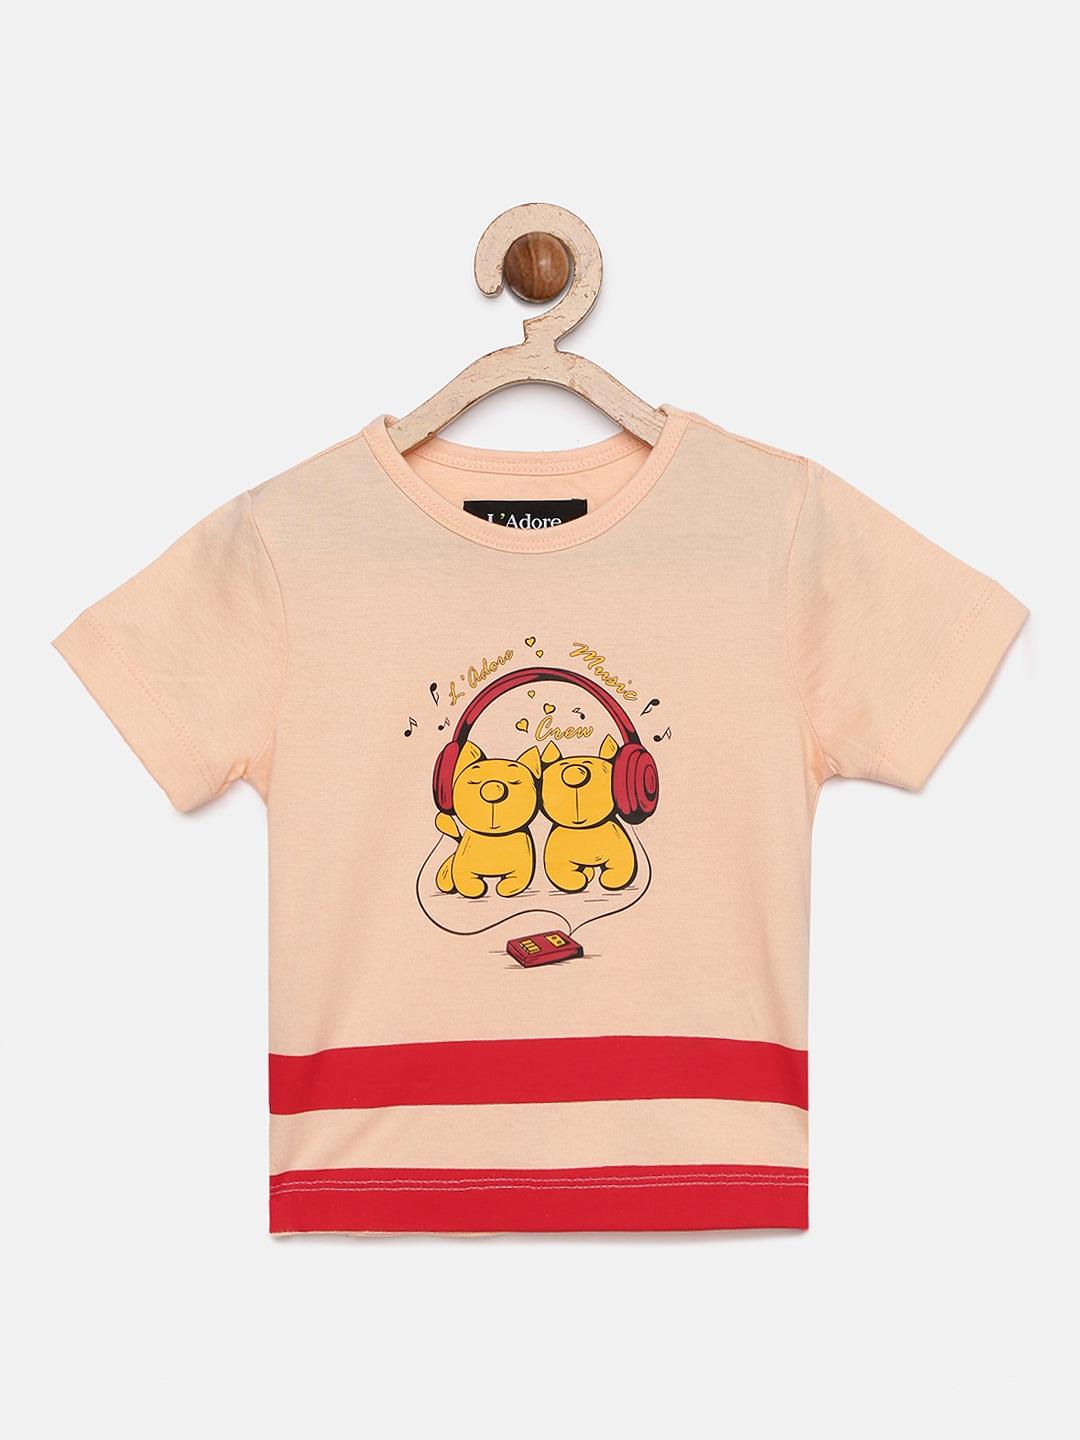 ladore-boys-peach-coloured-printed-round-neck-t-shirt